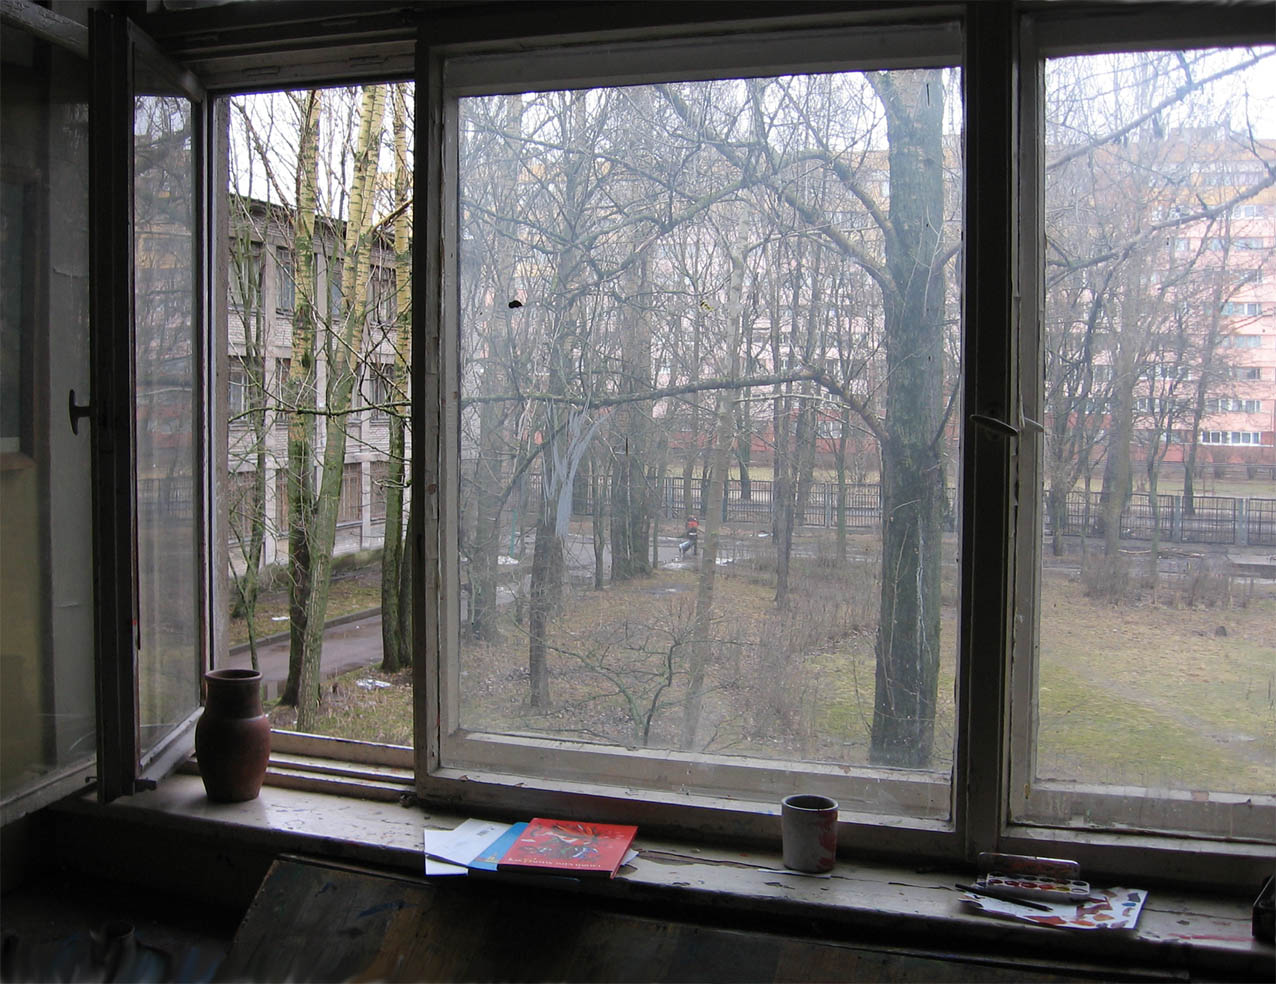 Вид из окна класса рисования.